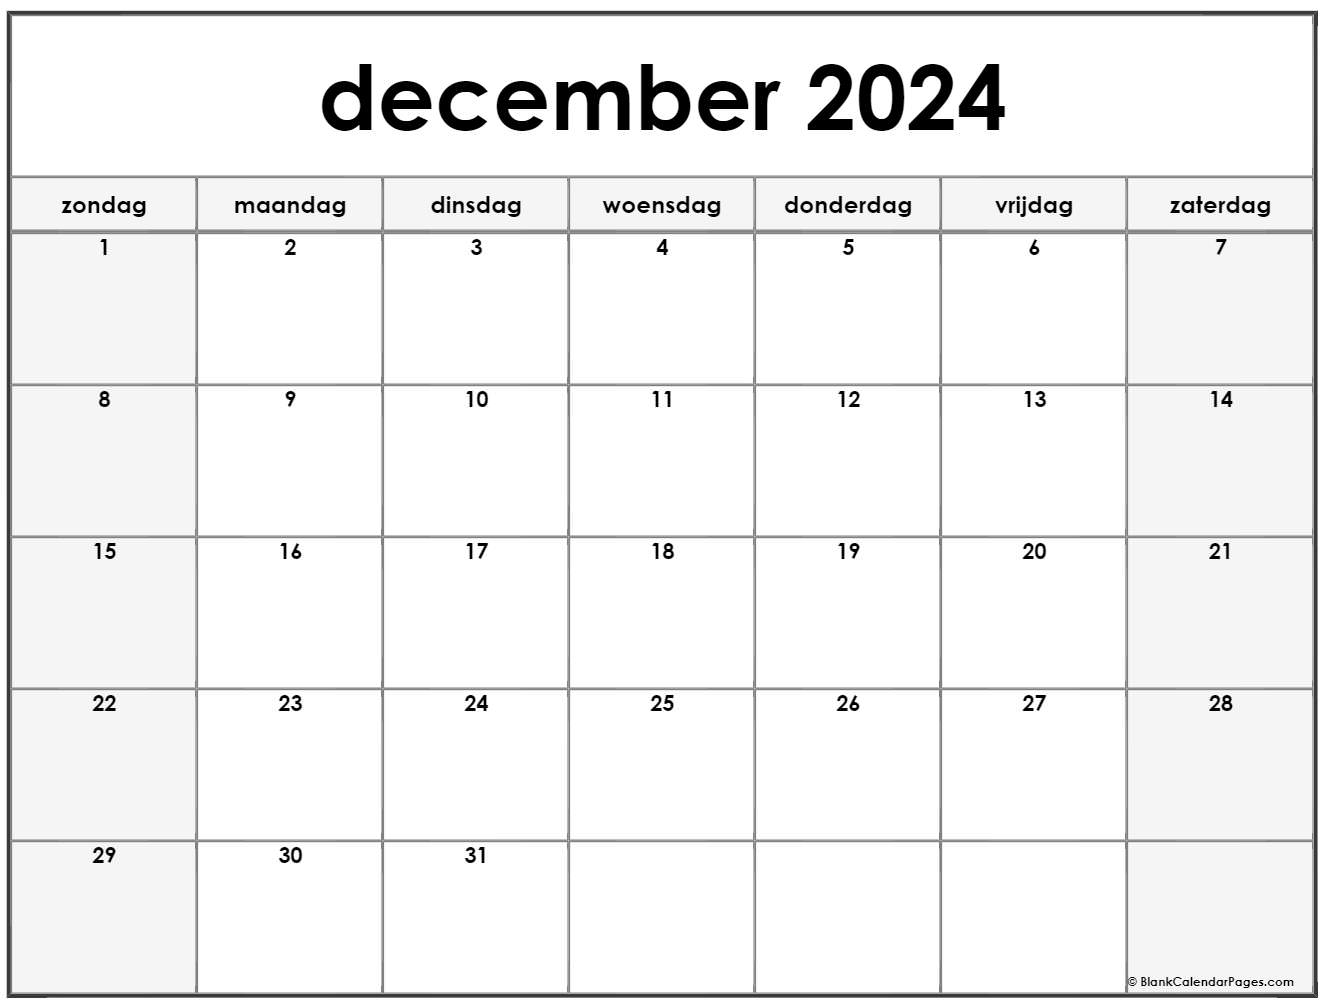 Edelsteen Assimileren Portiek december 2022 kalender Nederlandse | Kalender december